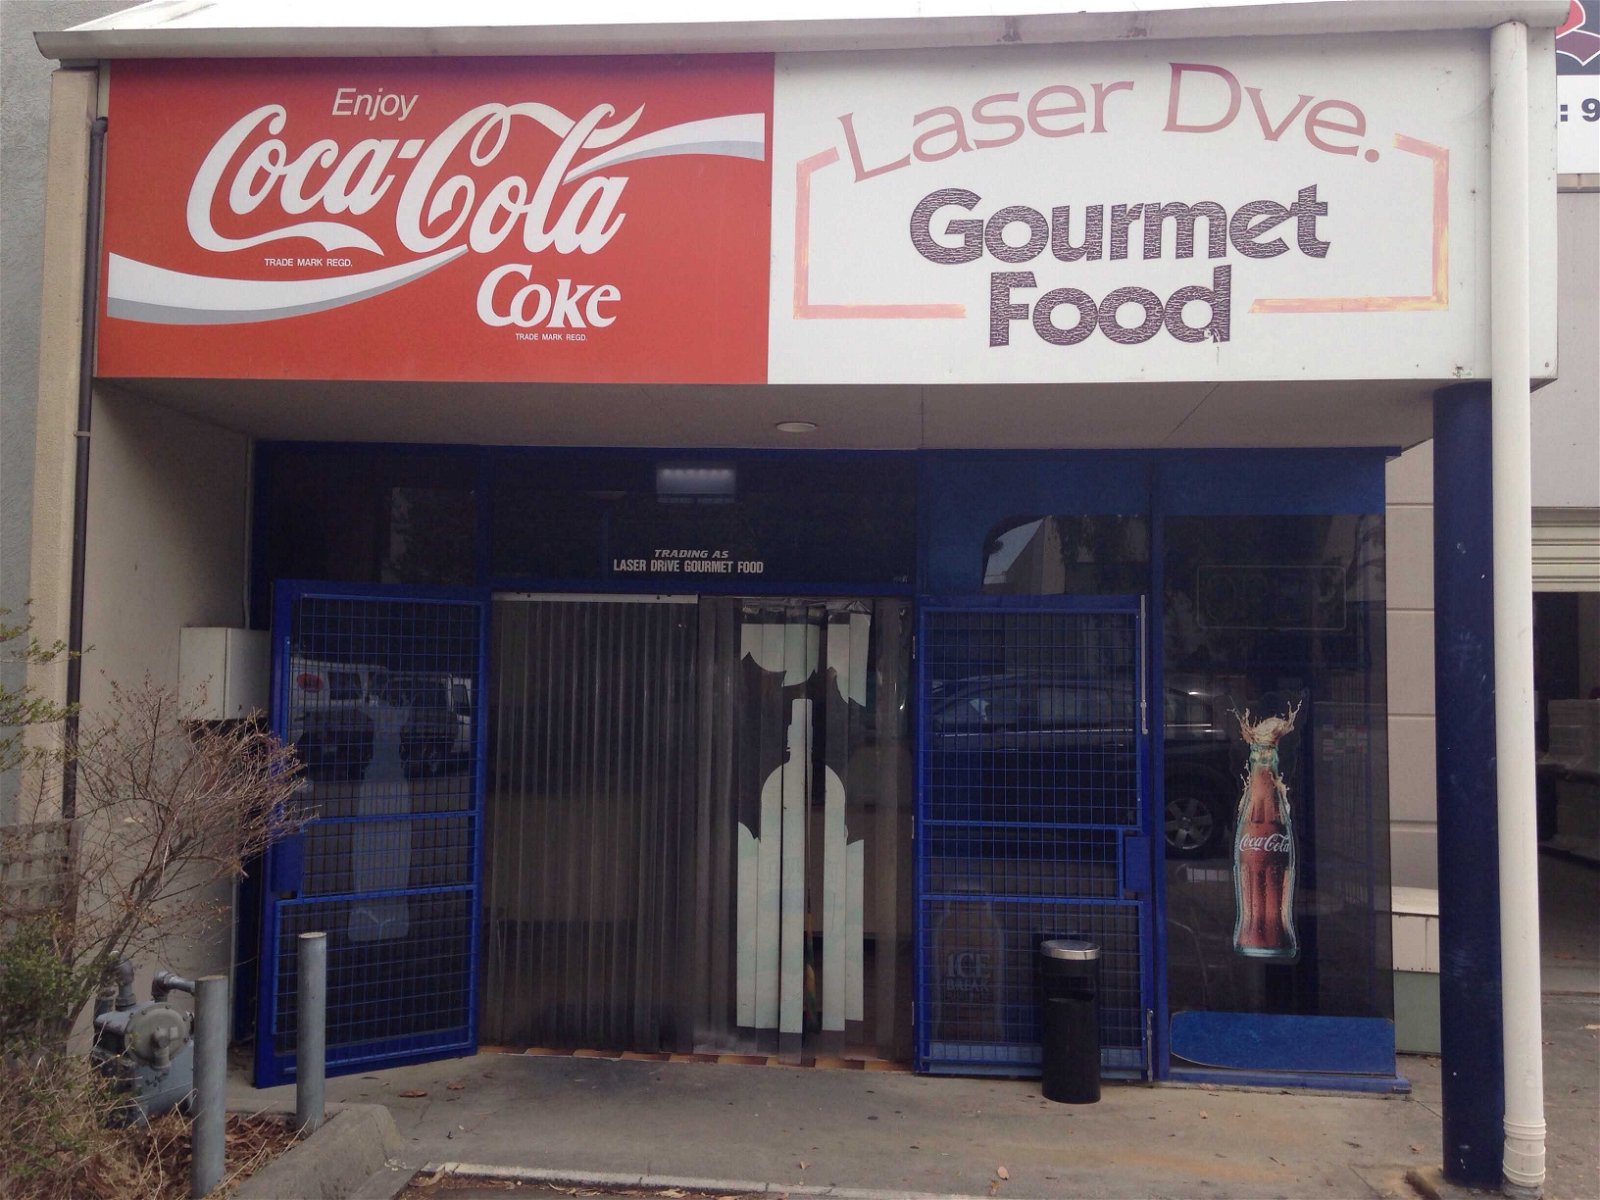 Laser Drive Gourmet Food - Australia Accommodation